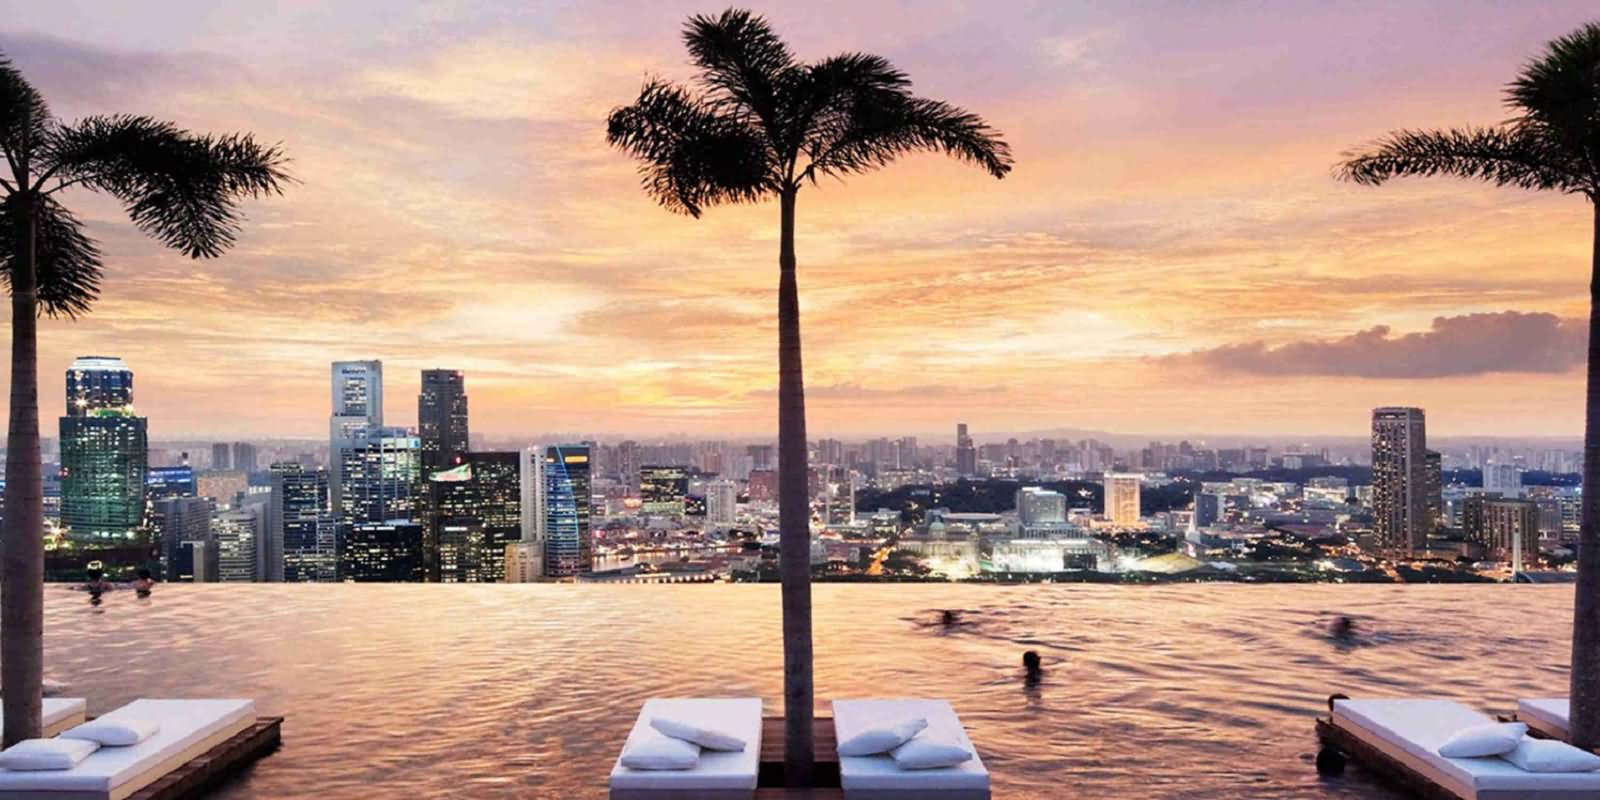 Marina Bay Sands, Singapore Sunset View